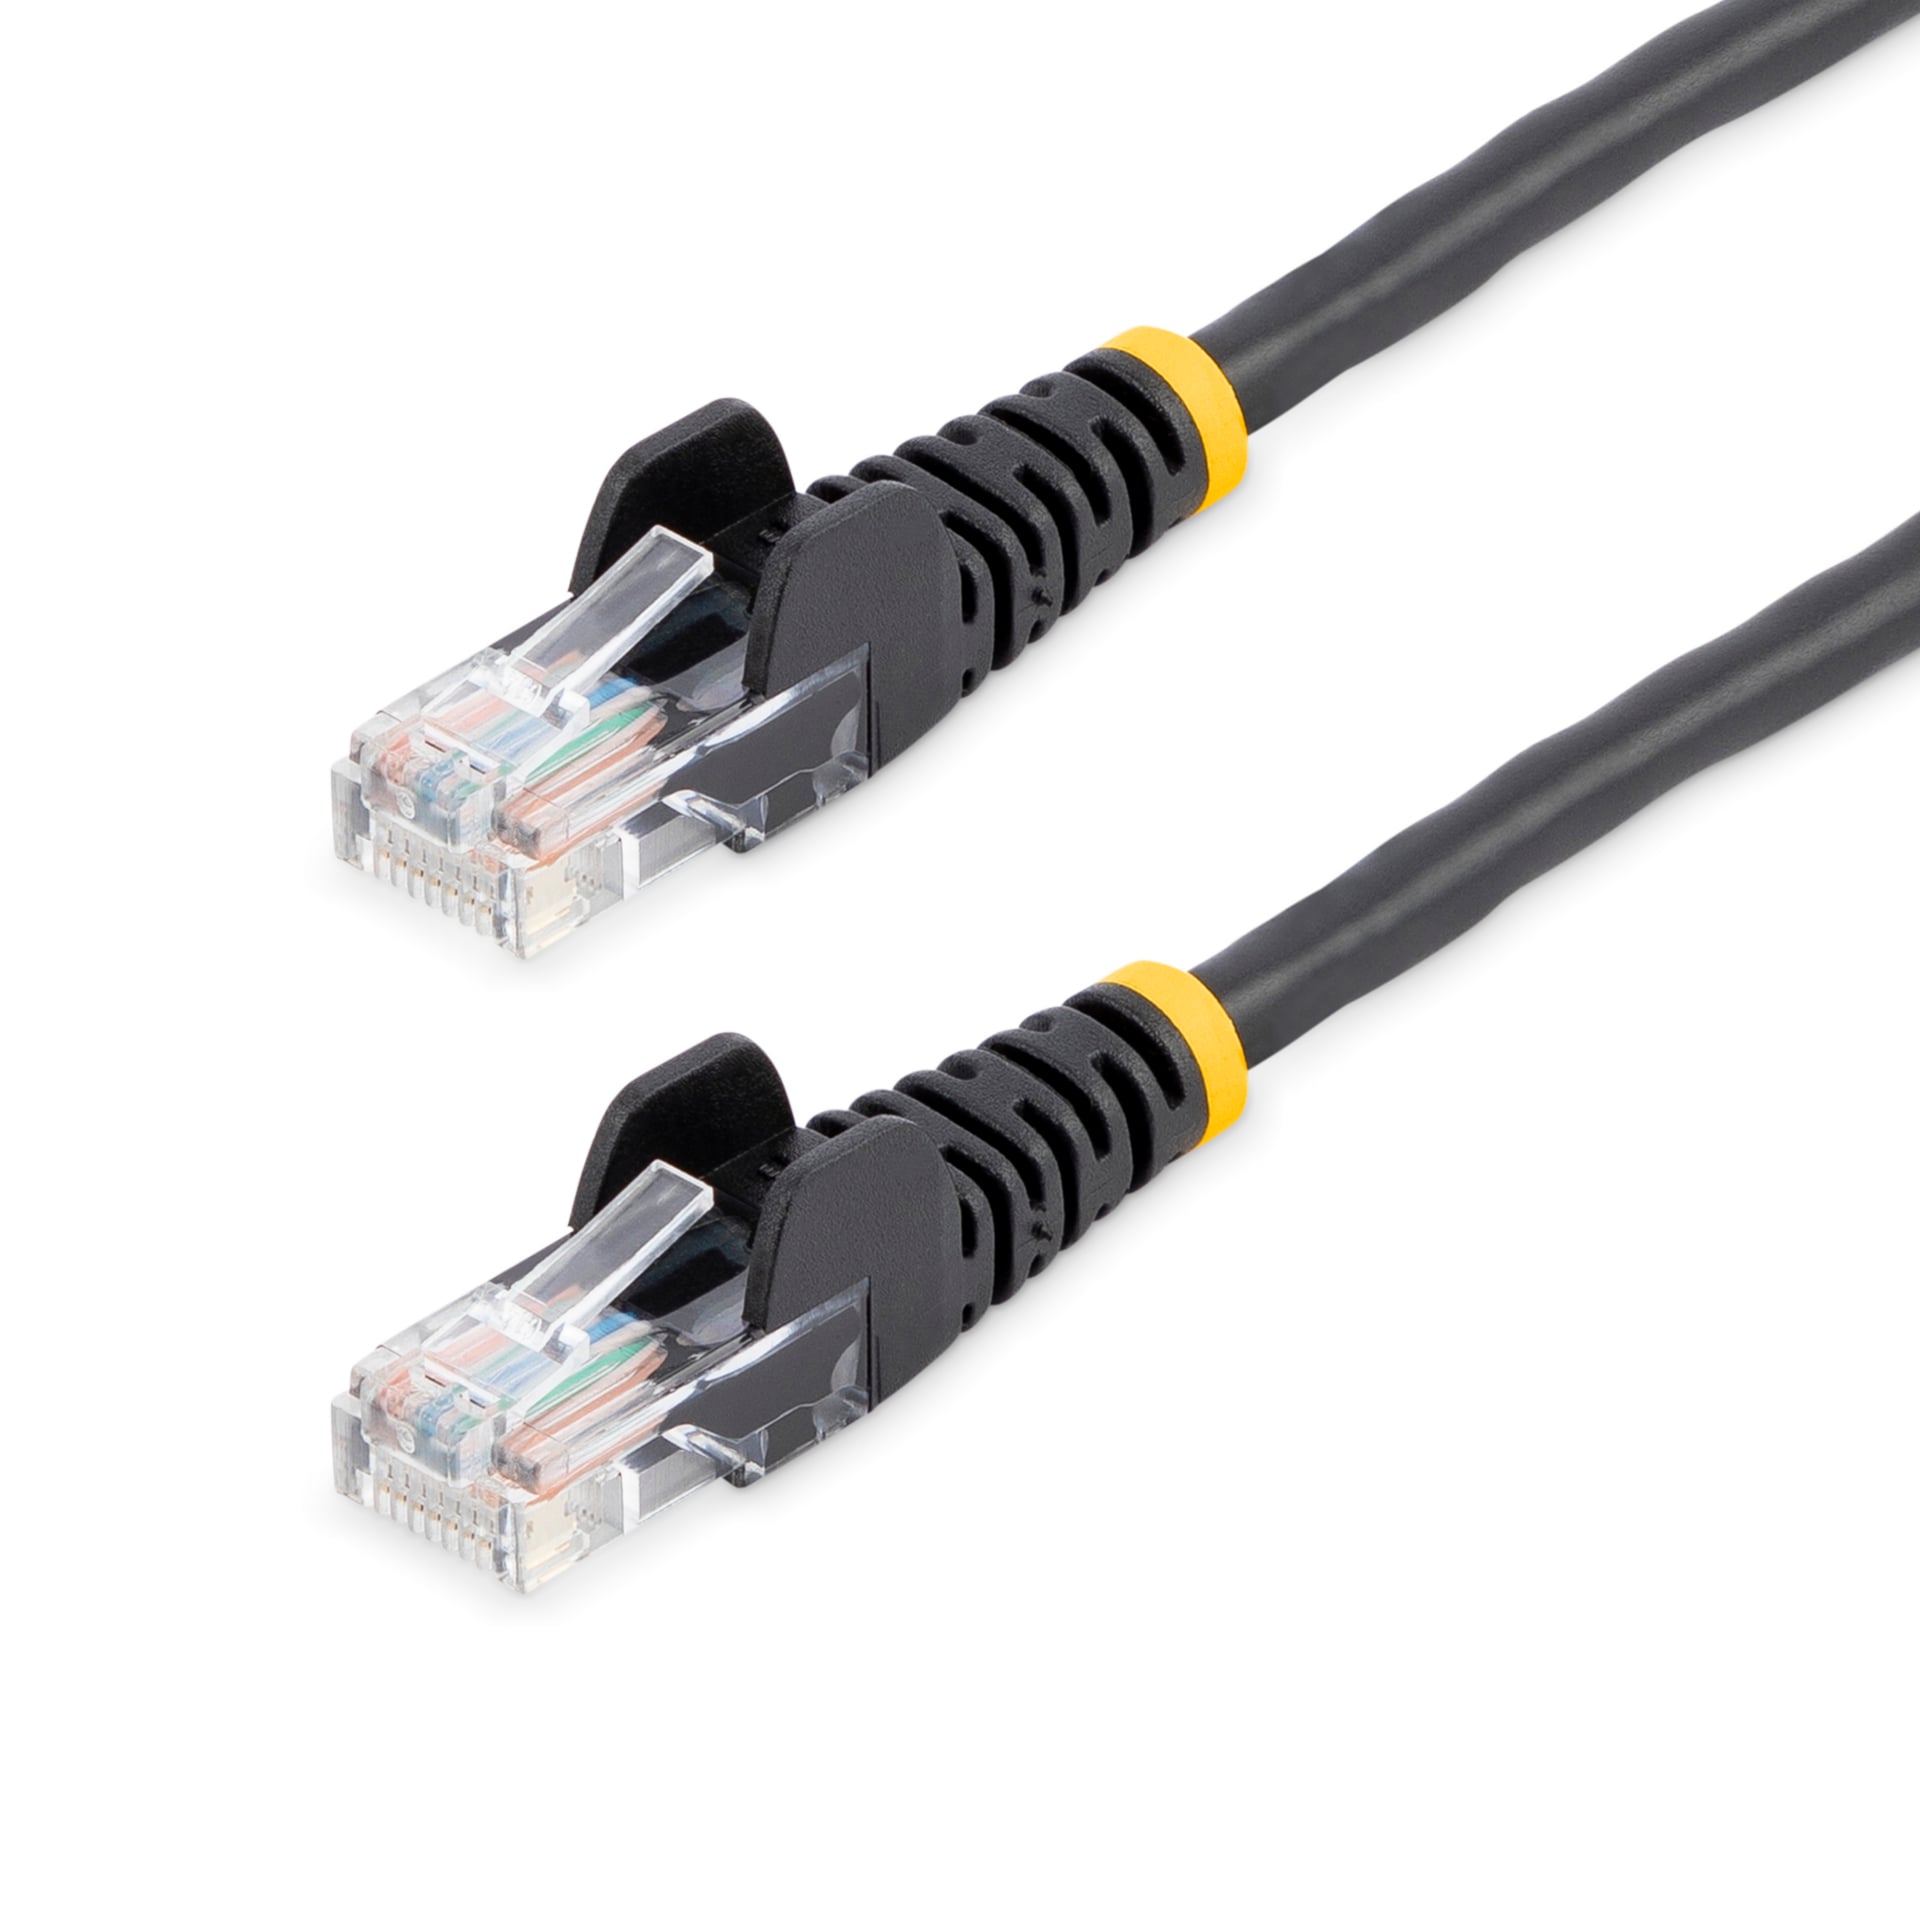 StarTech.com Cat5e Ethernet Cable 50 ft Black - Cat 5e Snagless Patch Cable